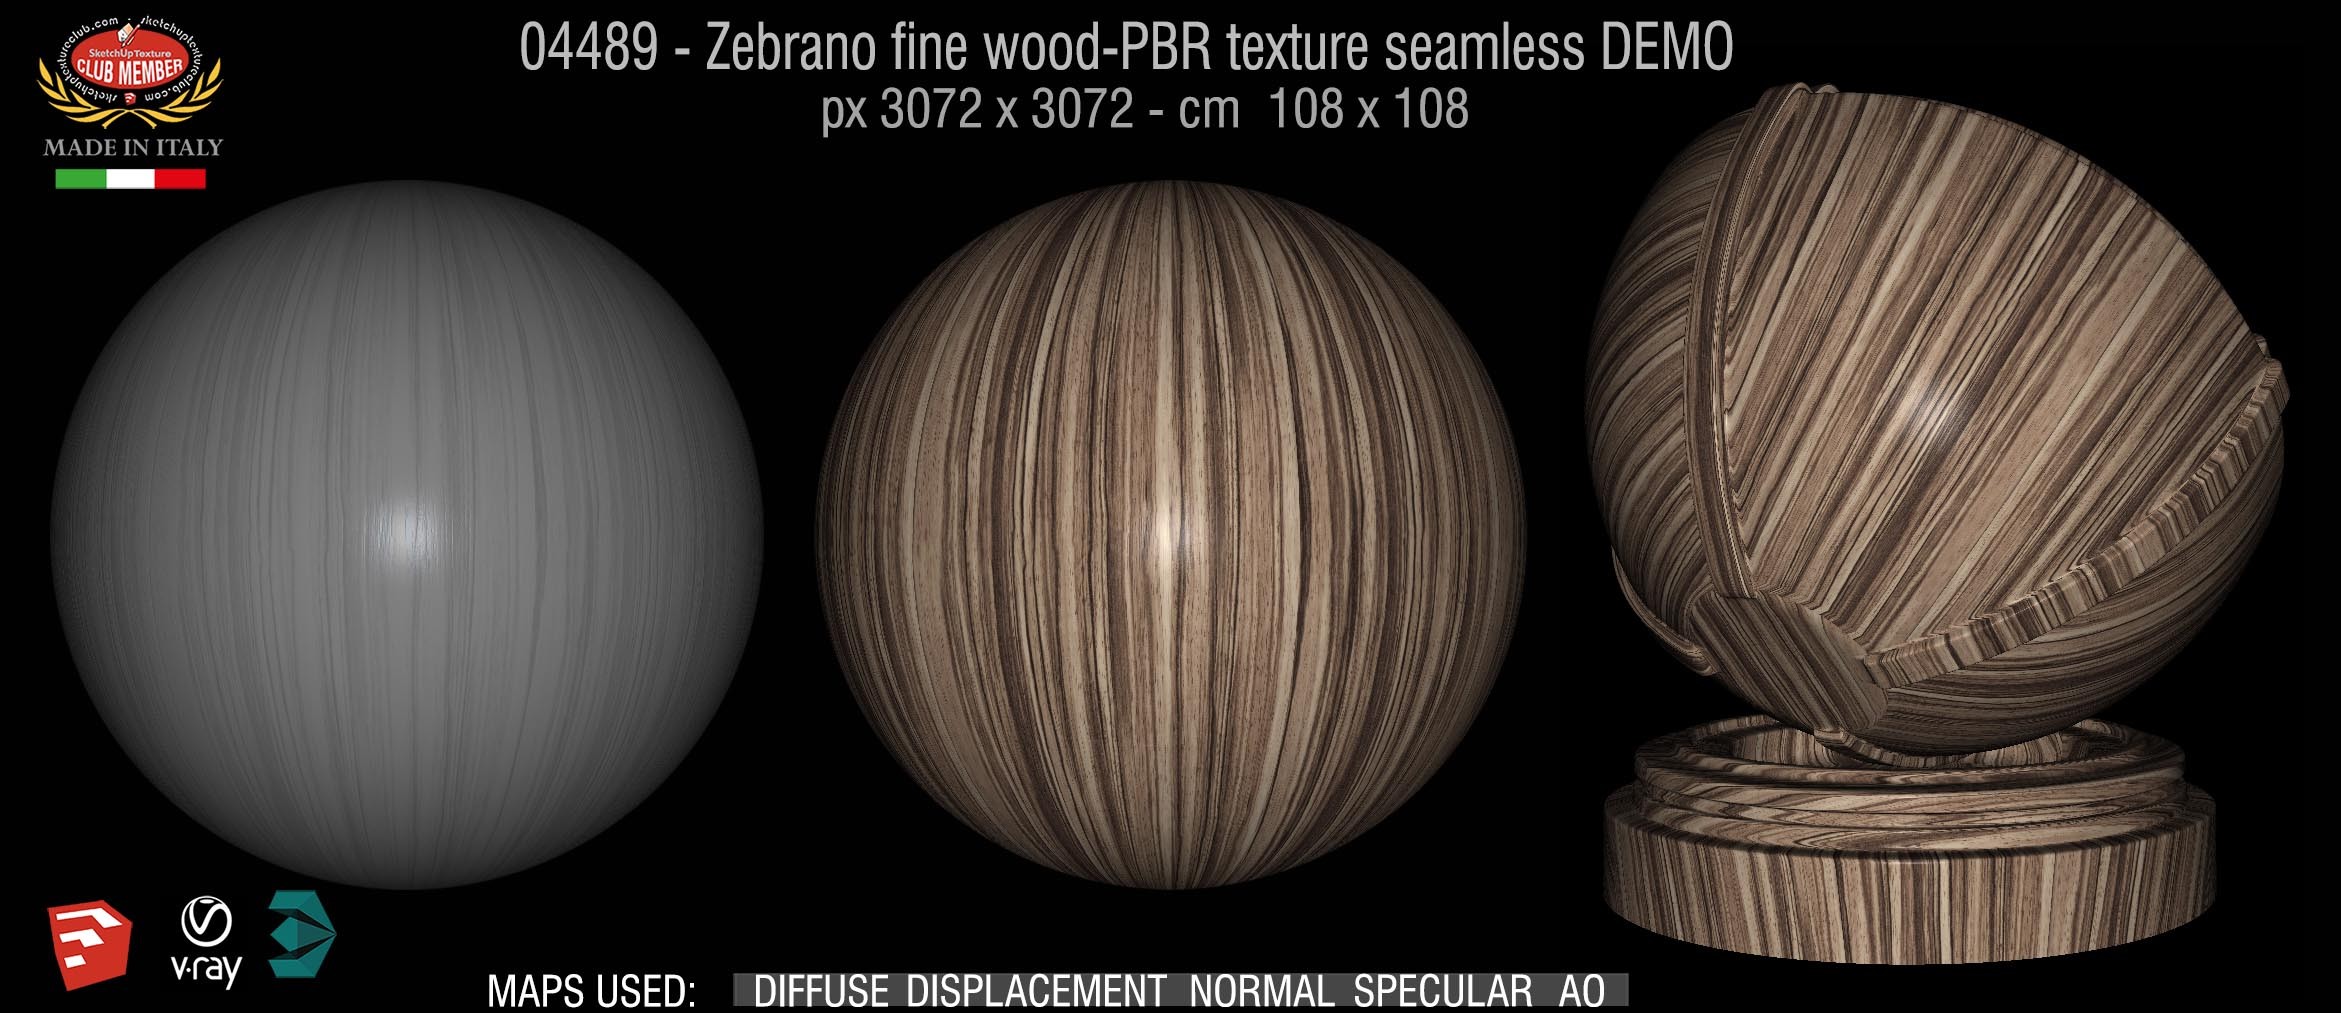 04489 Zebrano fine wood-PBR texture seamless DEMO